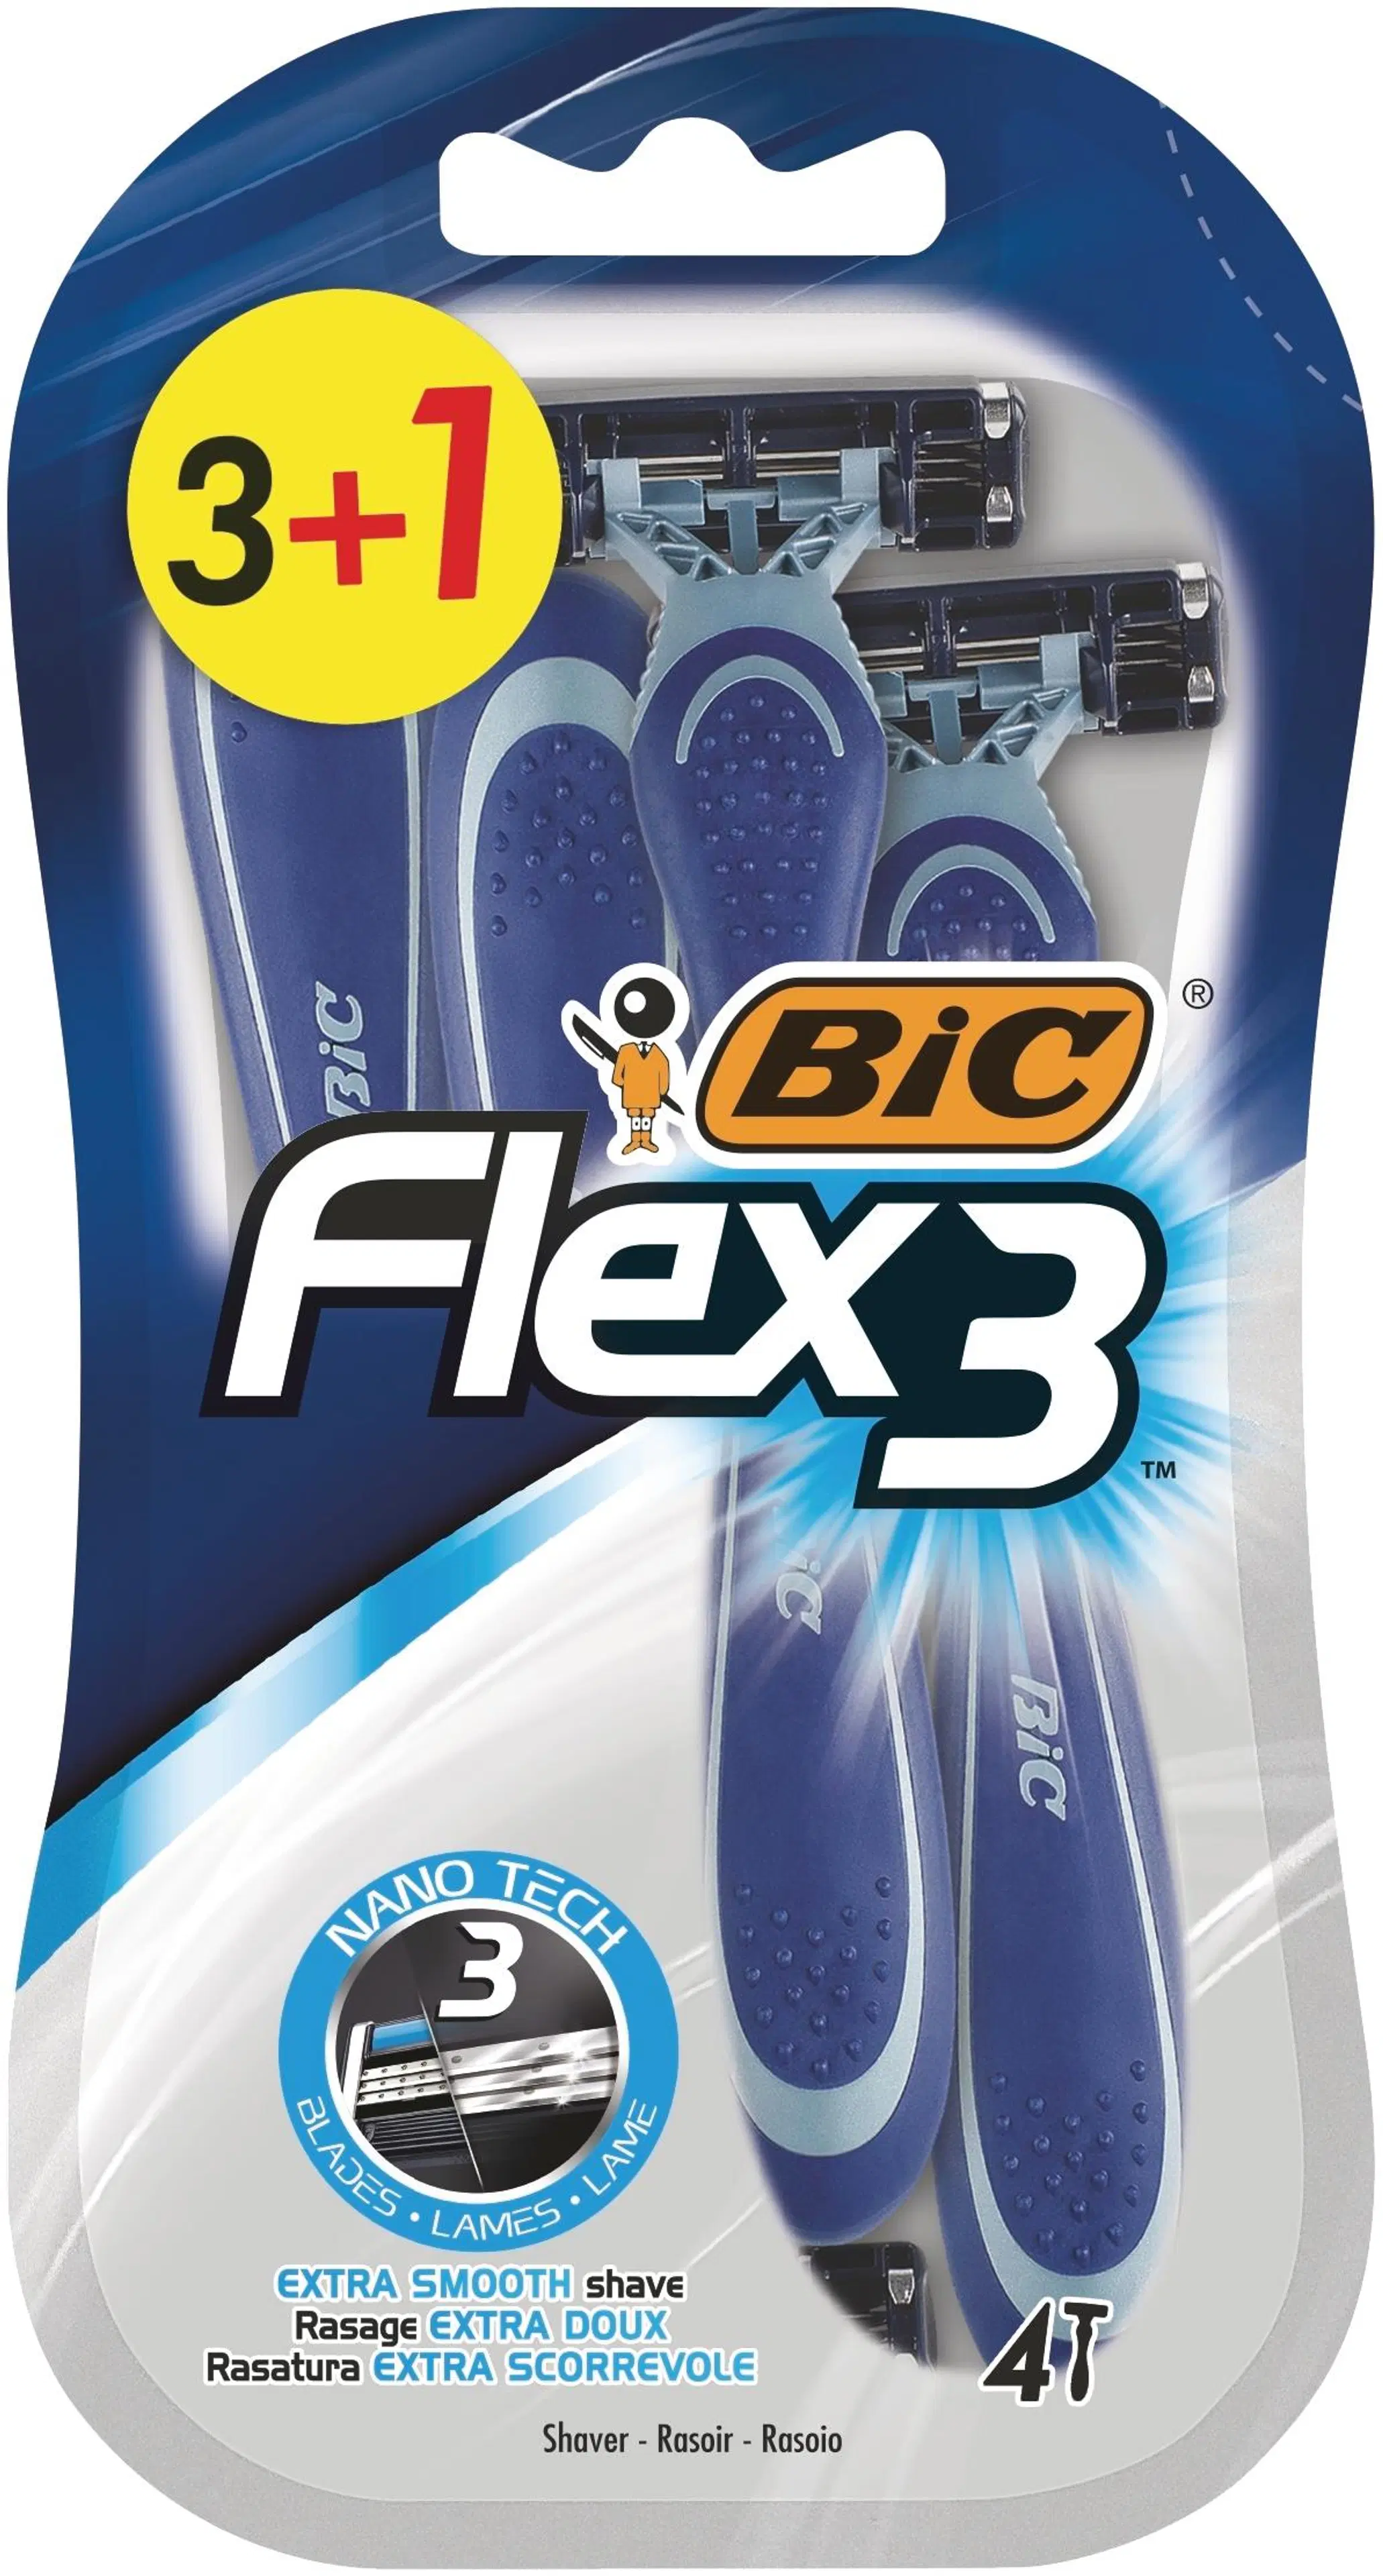 Bic varsiterä Flex 3 3+1-pack